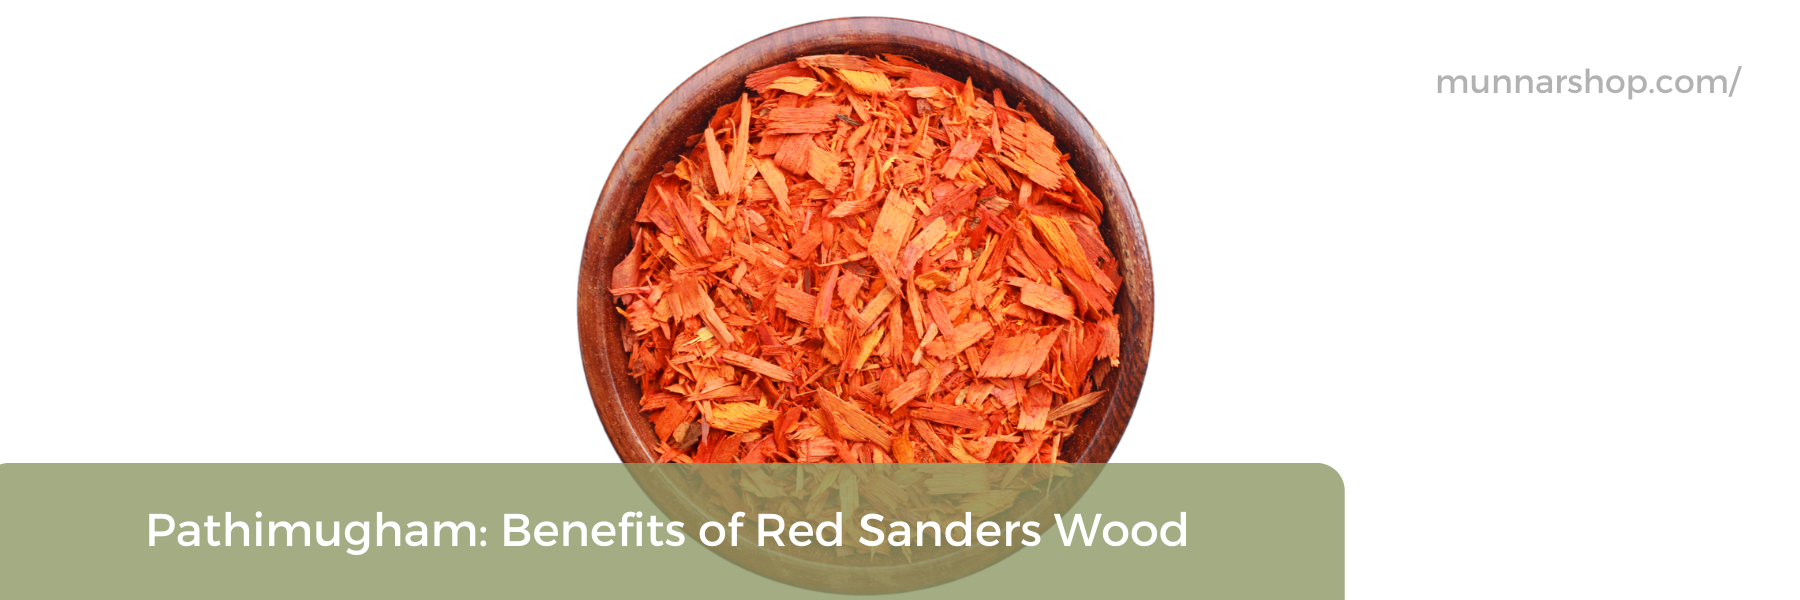 Pathimugham Benefits of Red Sanders Wood